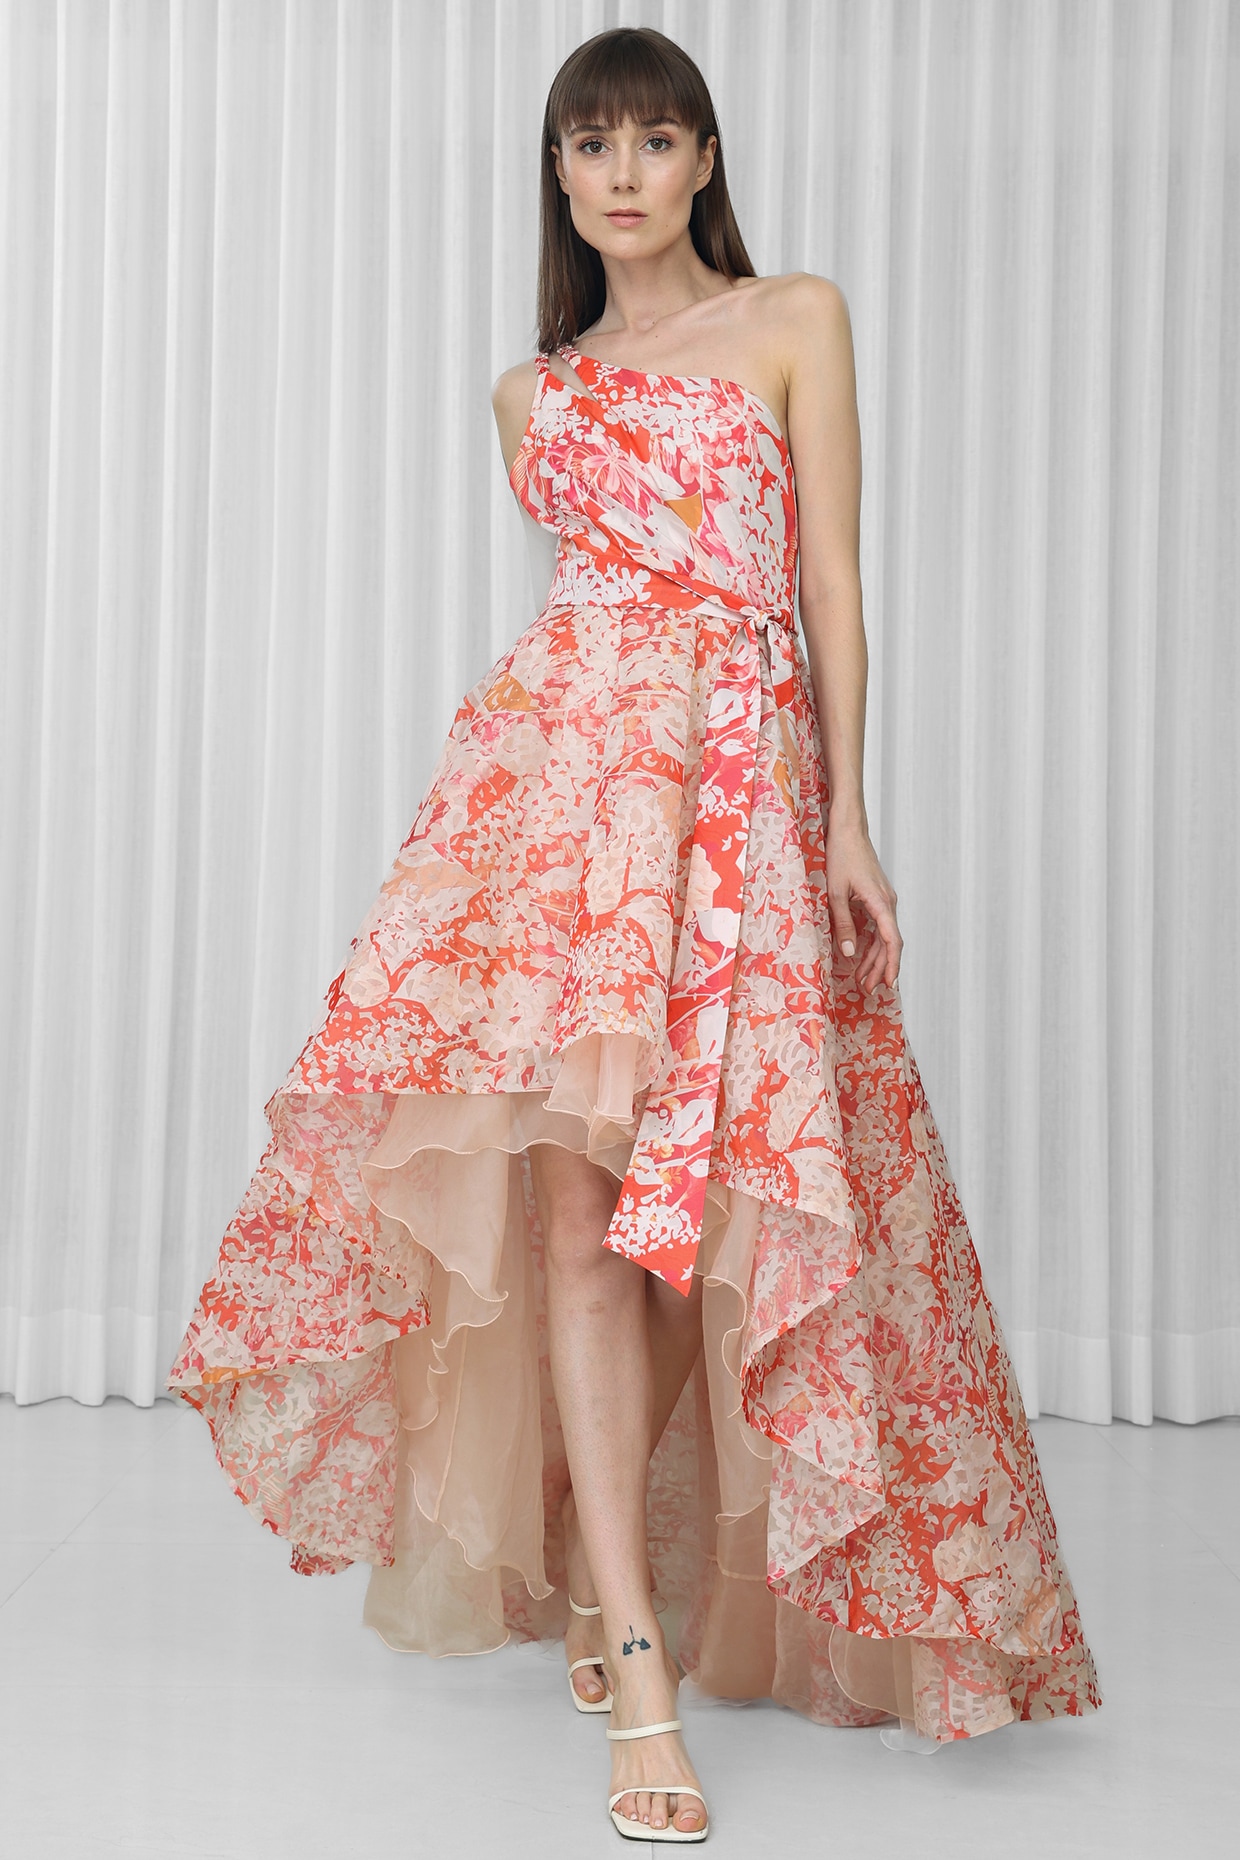 Red And White Floral Organza Anarkali Set online in USA | Free Shipping ,  Easy Returns - Fledgling Wings | Anarkali dress pattern, Designer dresses,  Stylish dresses for girls